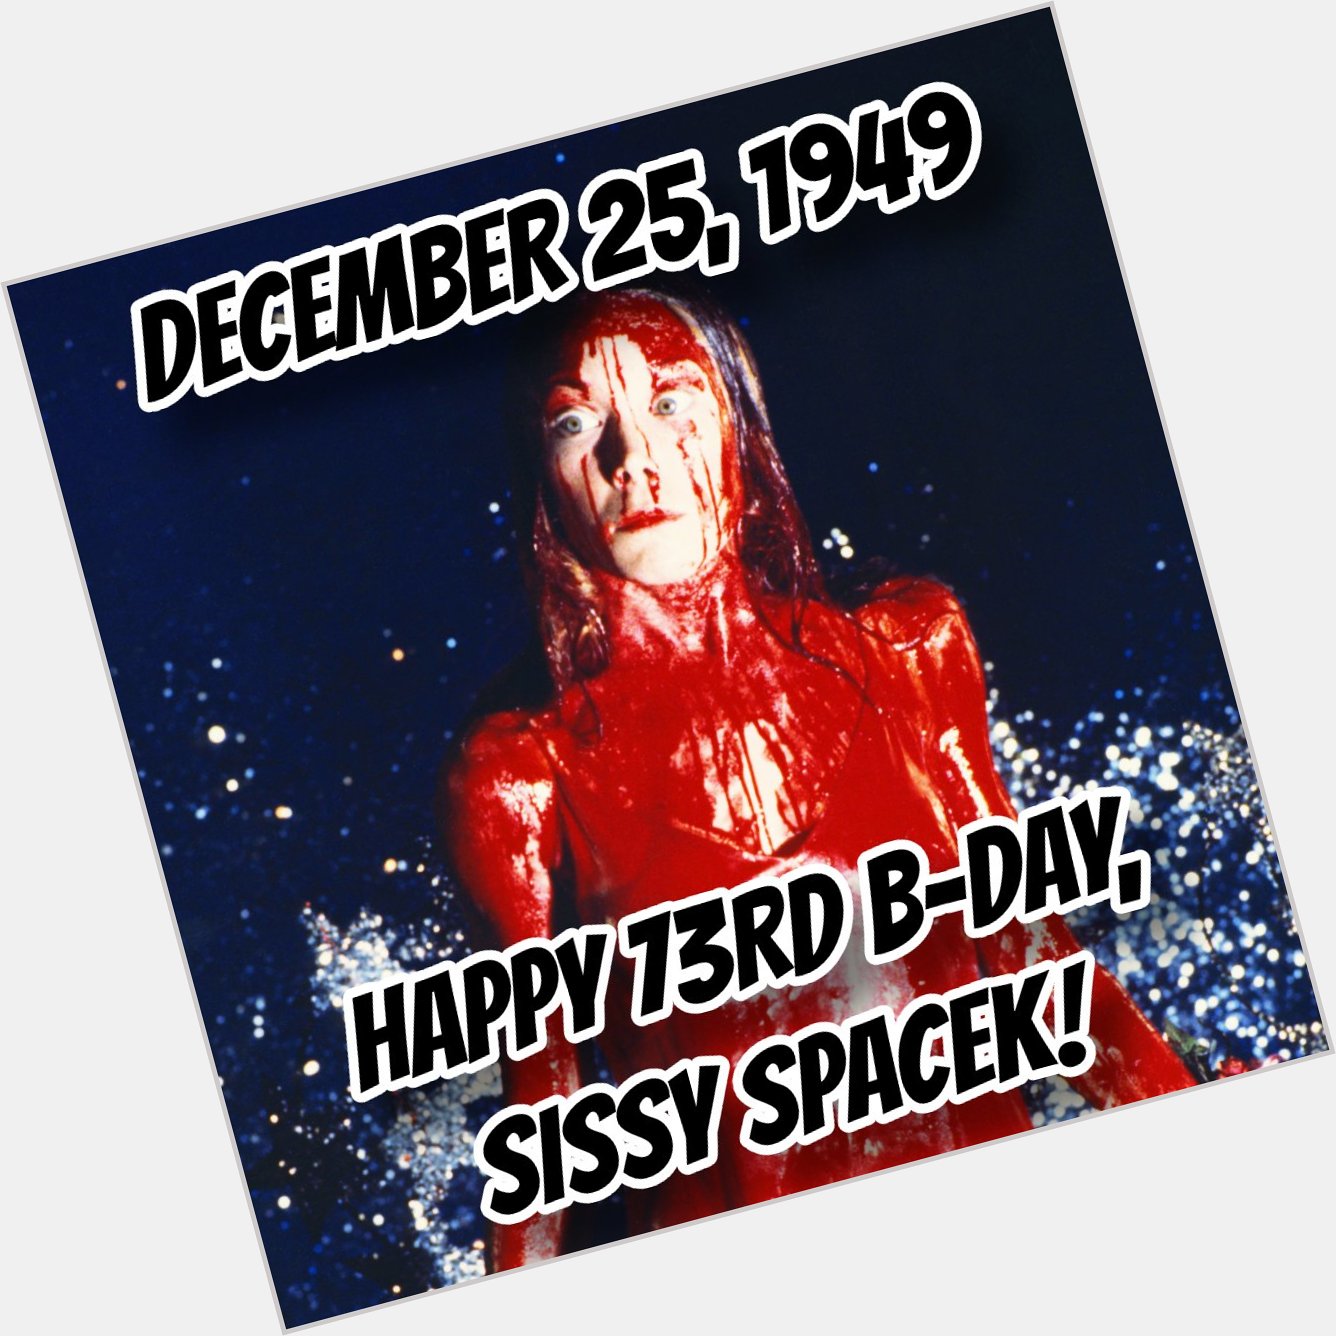 Happy 73rd Sissy Spacek!

What\s YOUR  movie??!! 